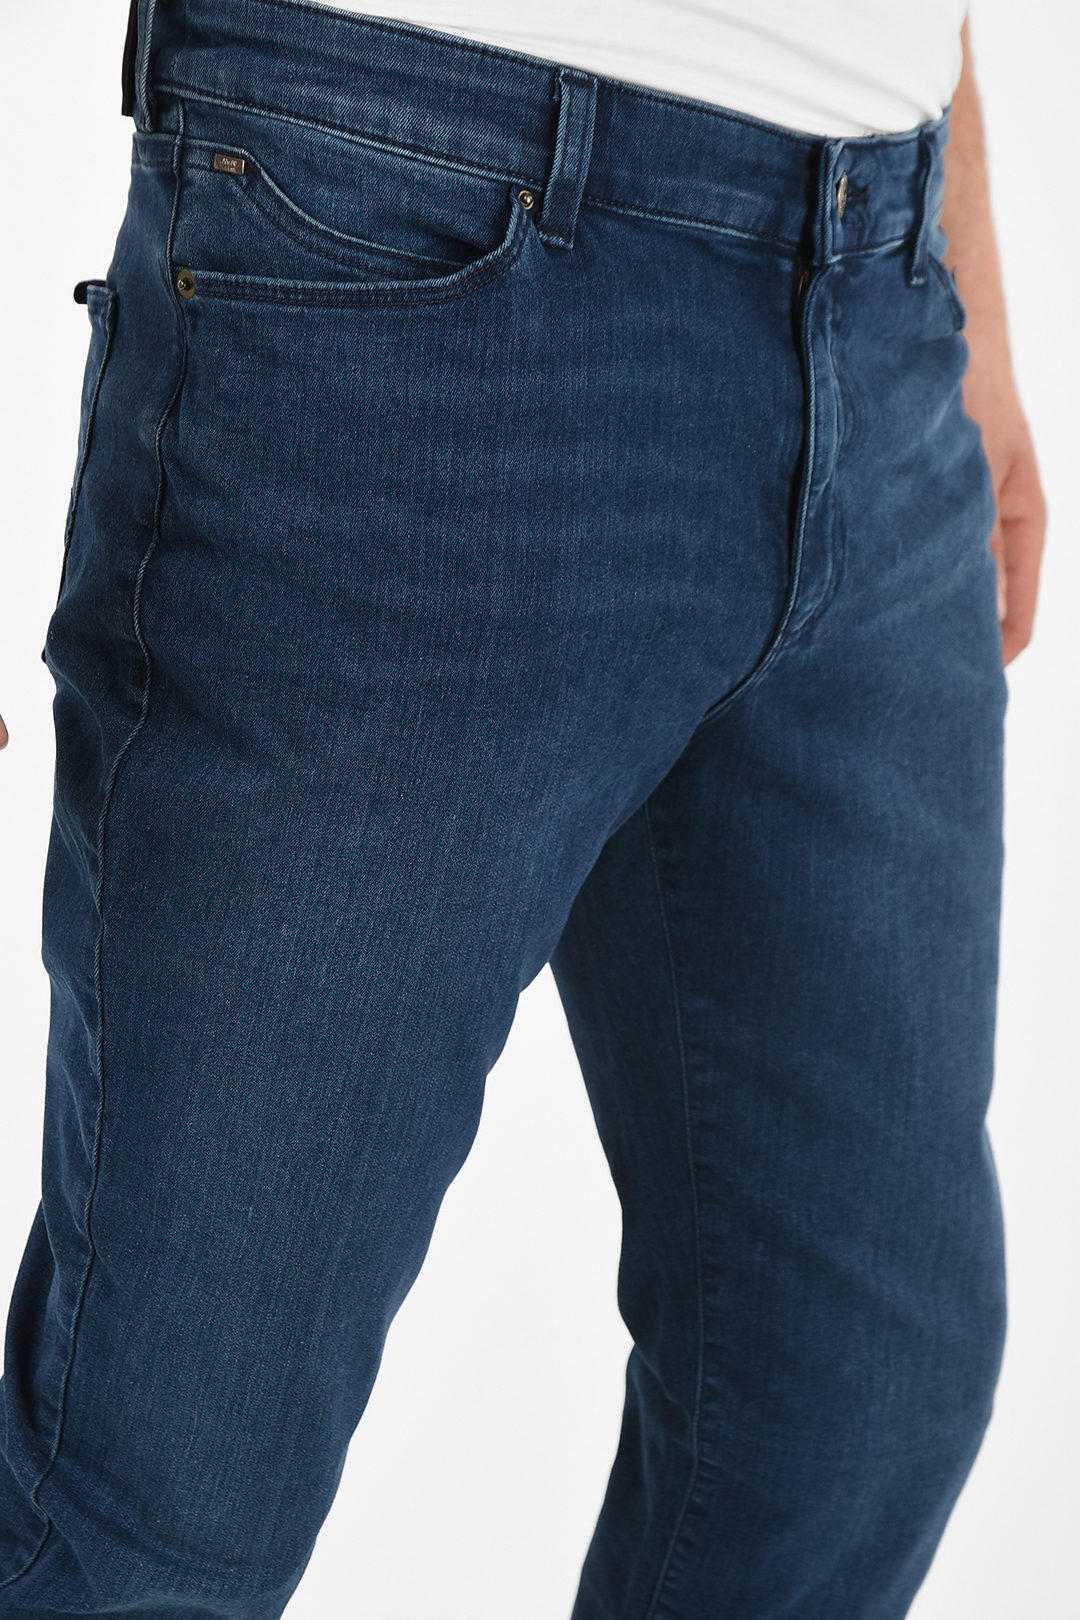 JEANS 17cm Slim Fit J18 DAHLIA Jeans women - Glamood